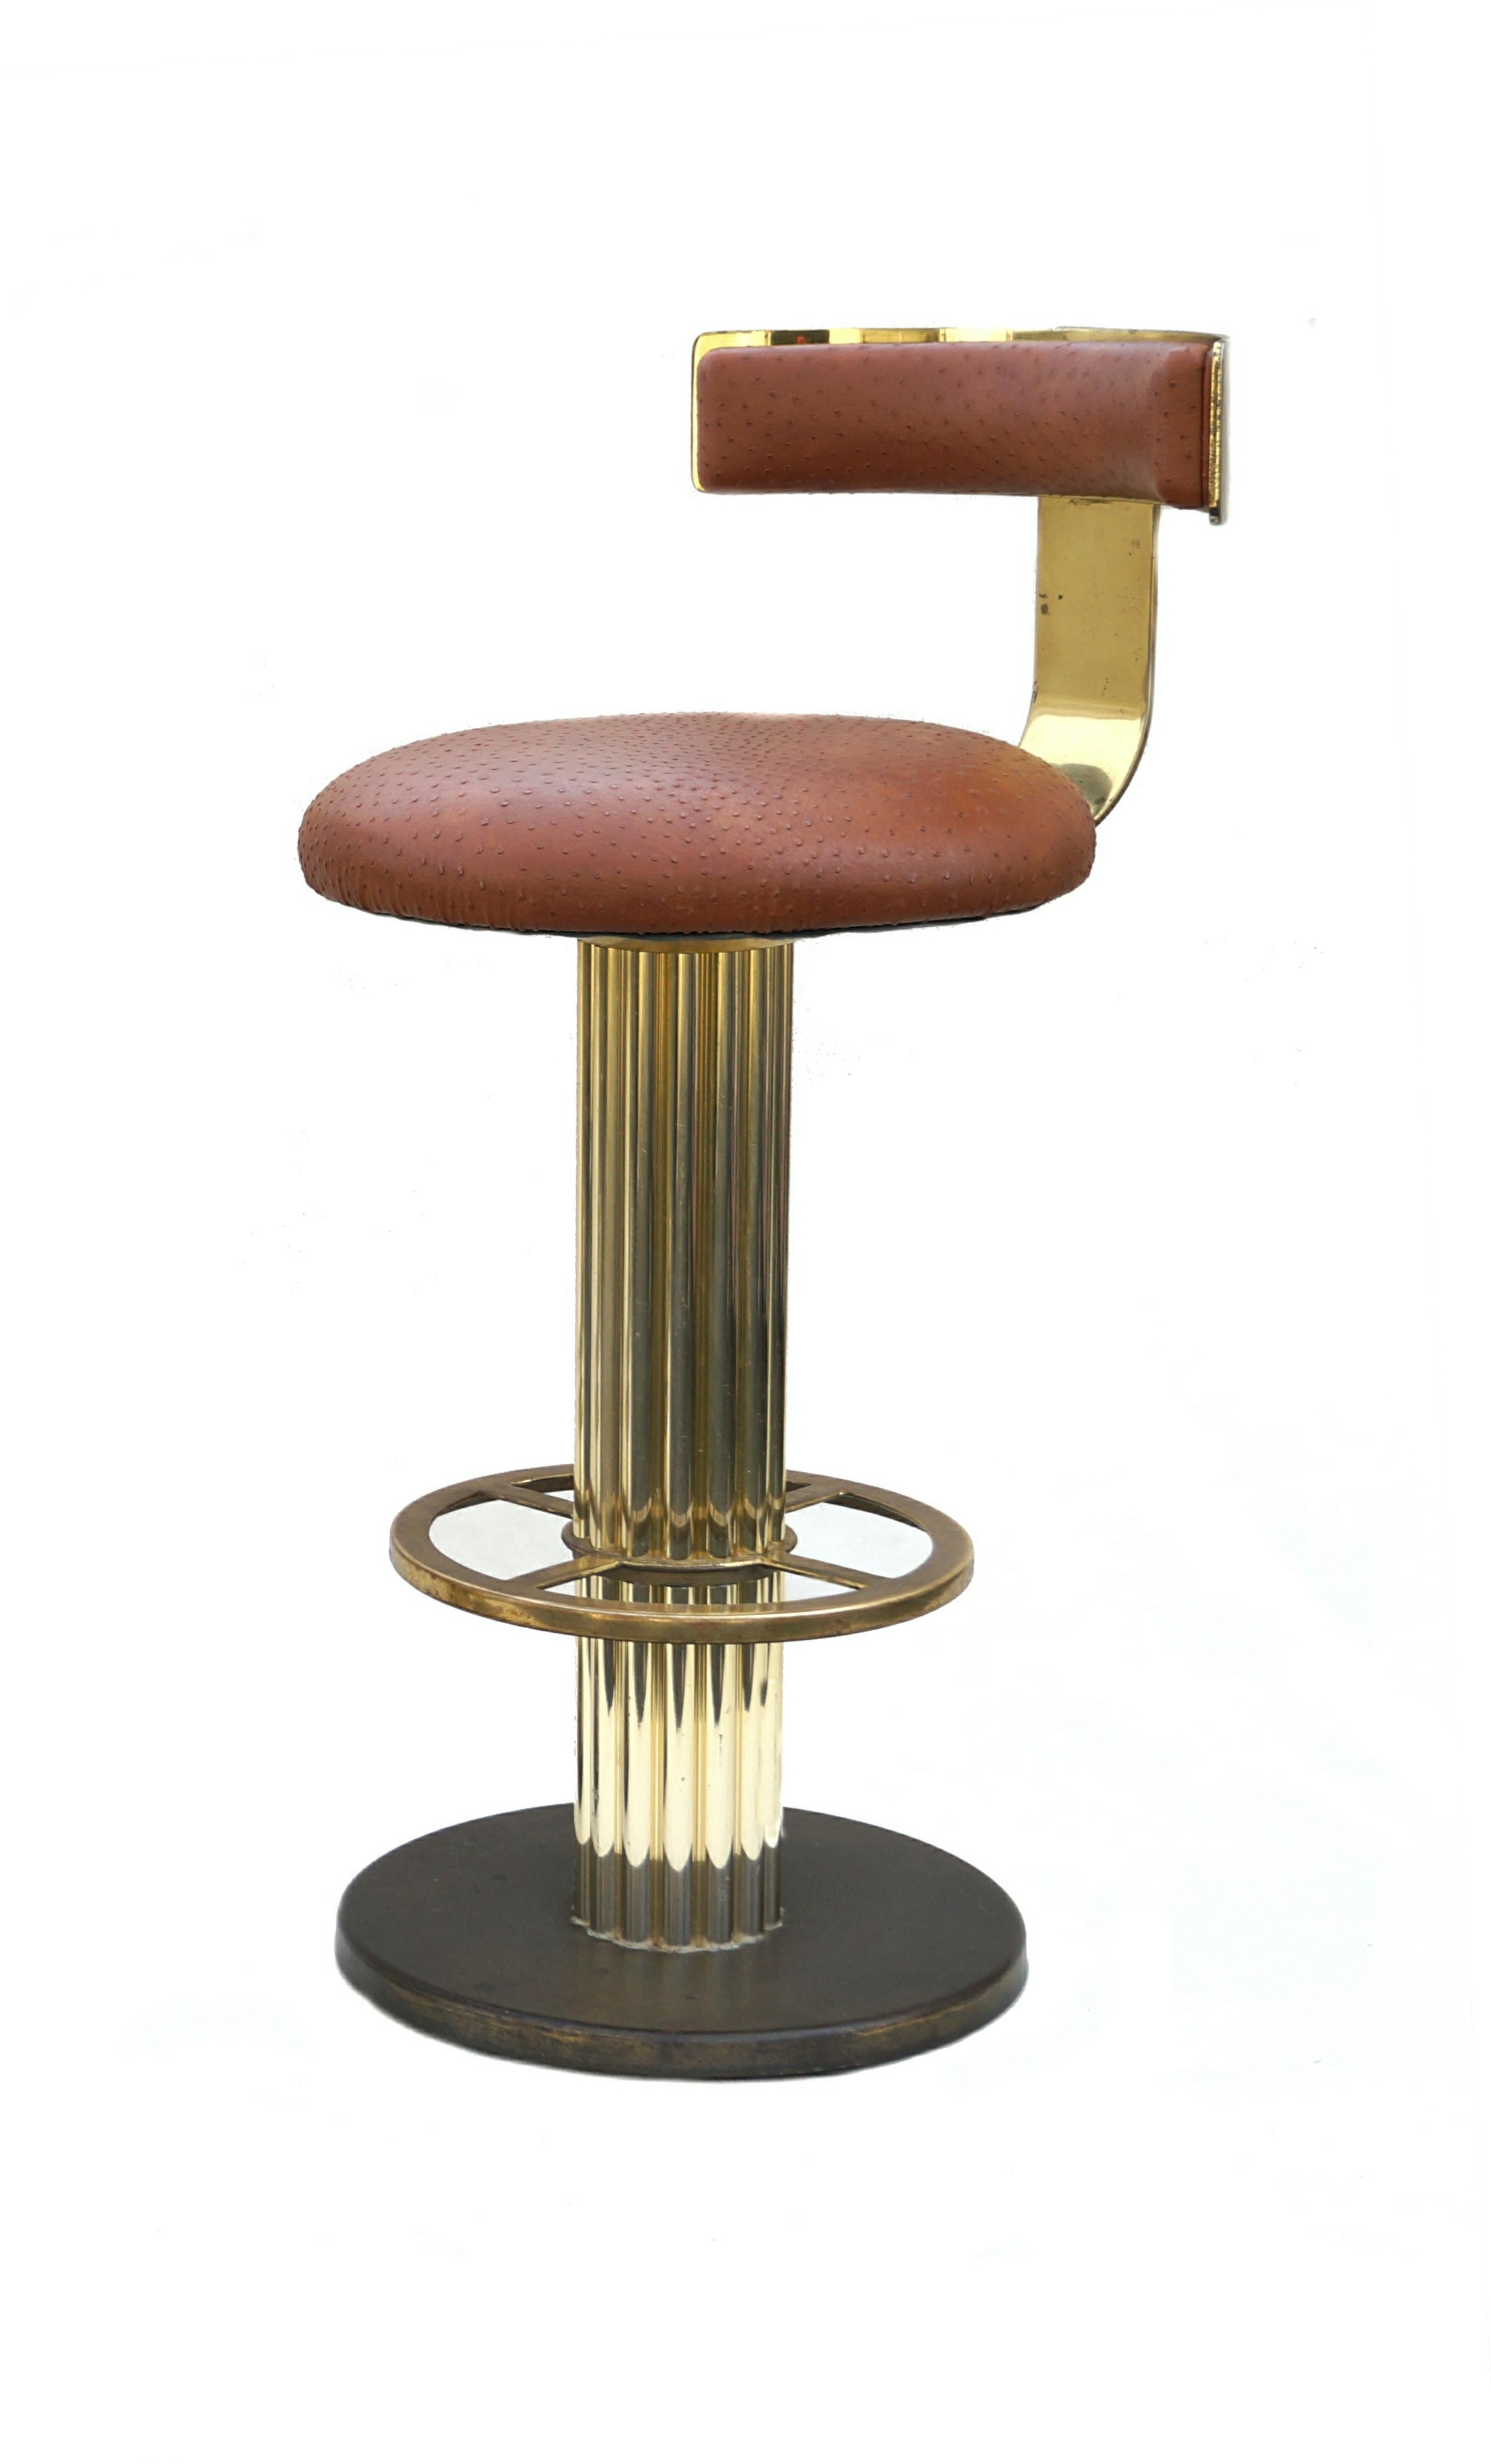 Other Modern Design For Leisure Ostrich Brass Bar Stools Set of 3 Barstool